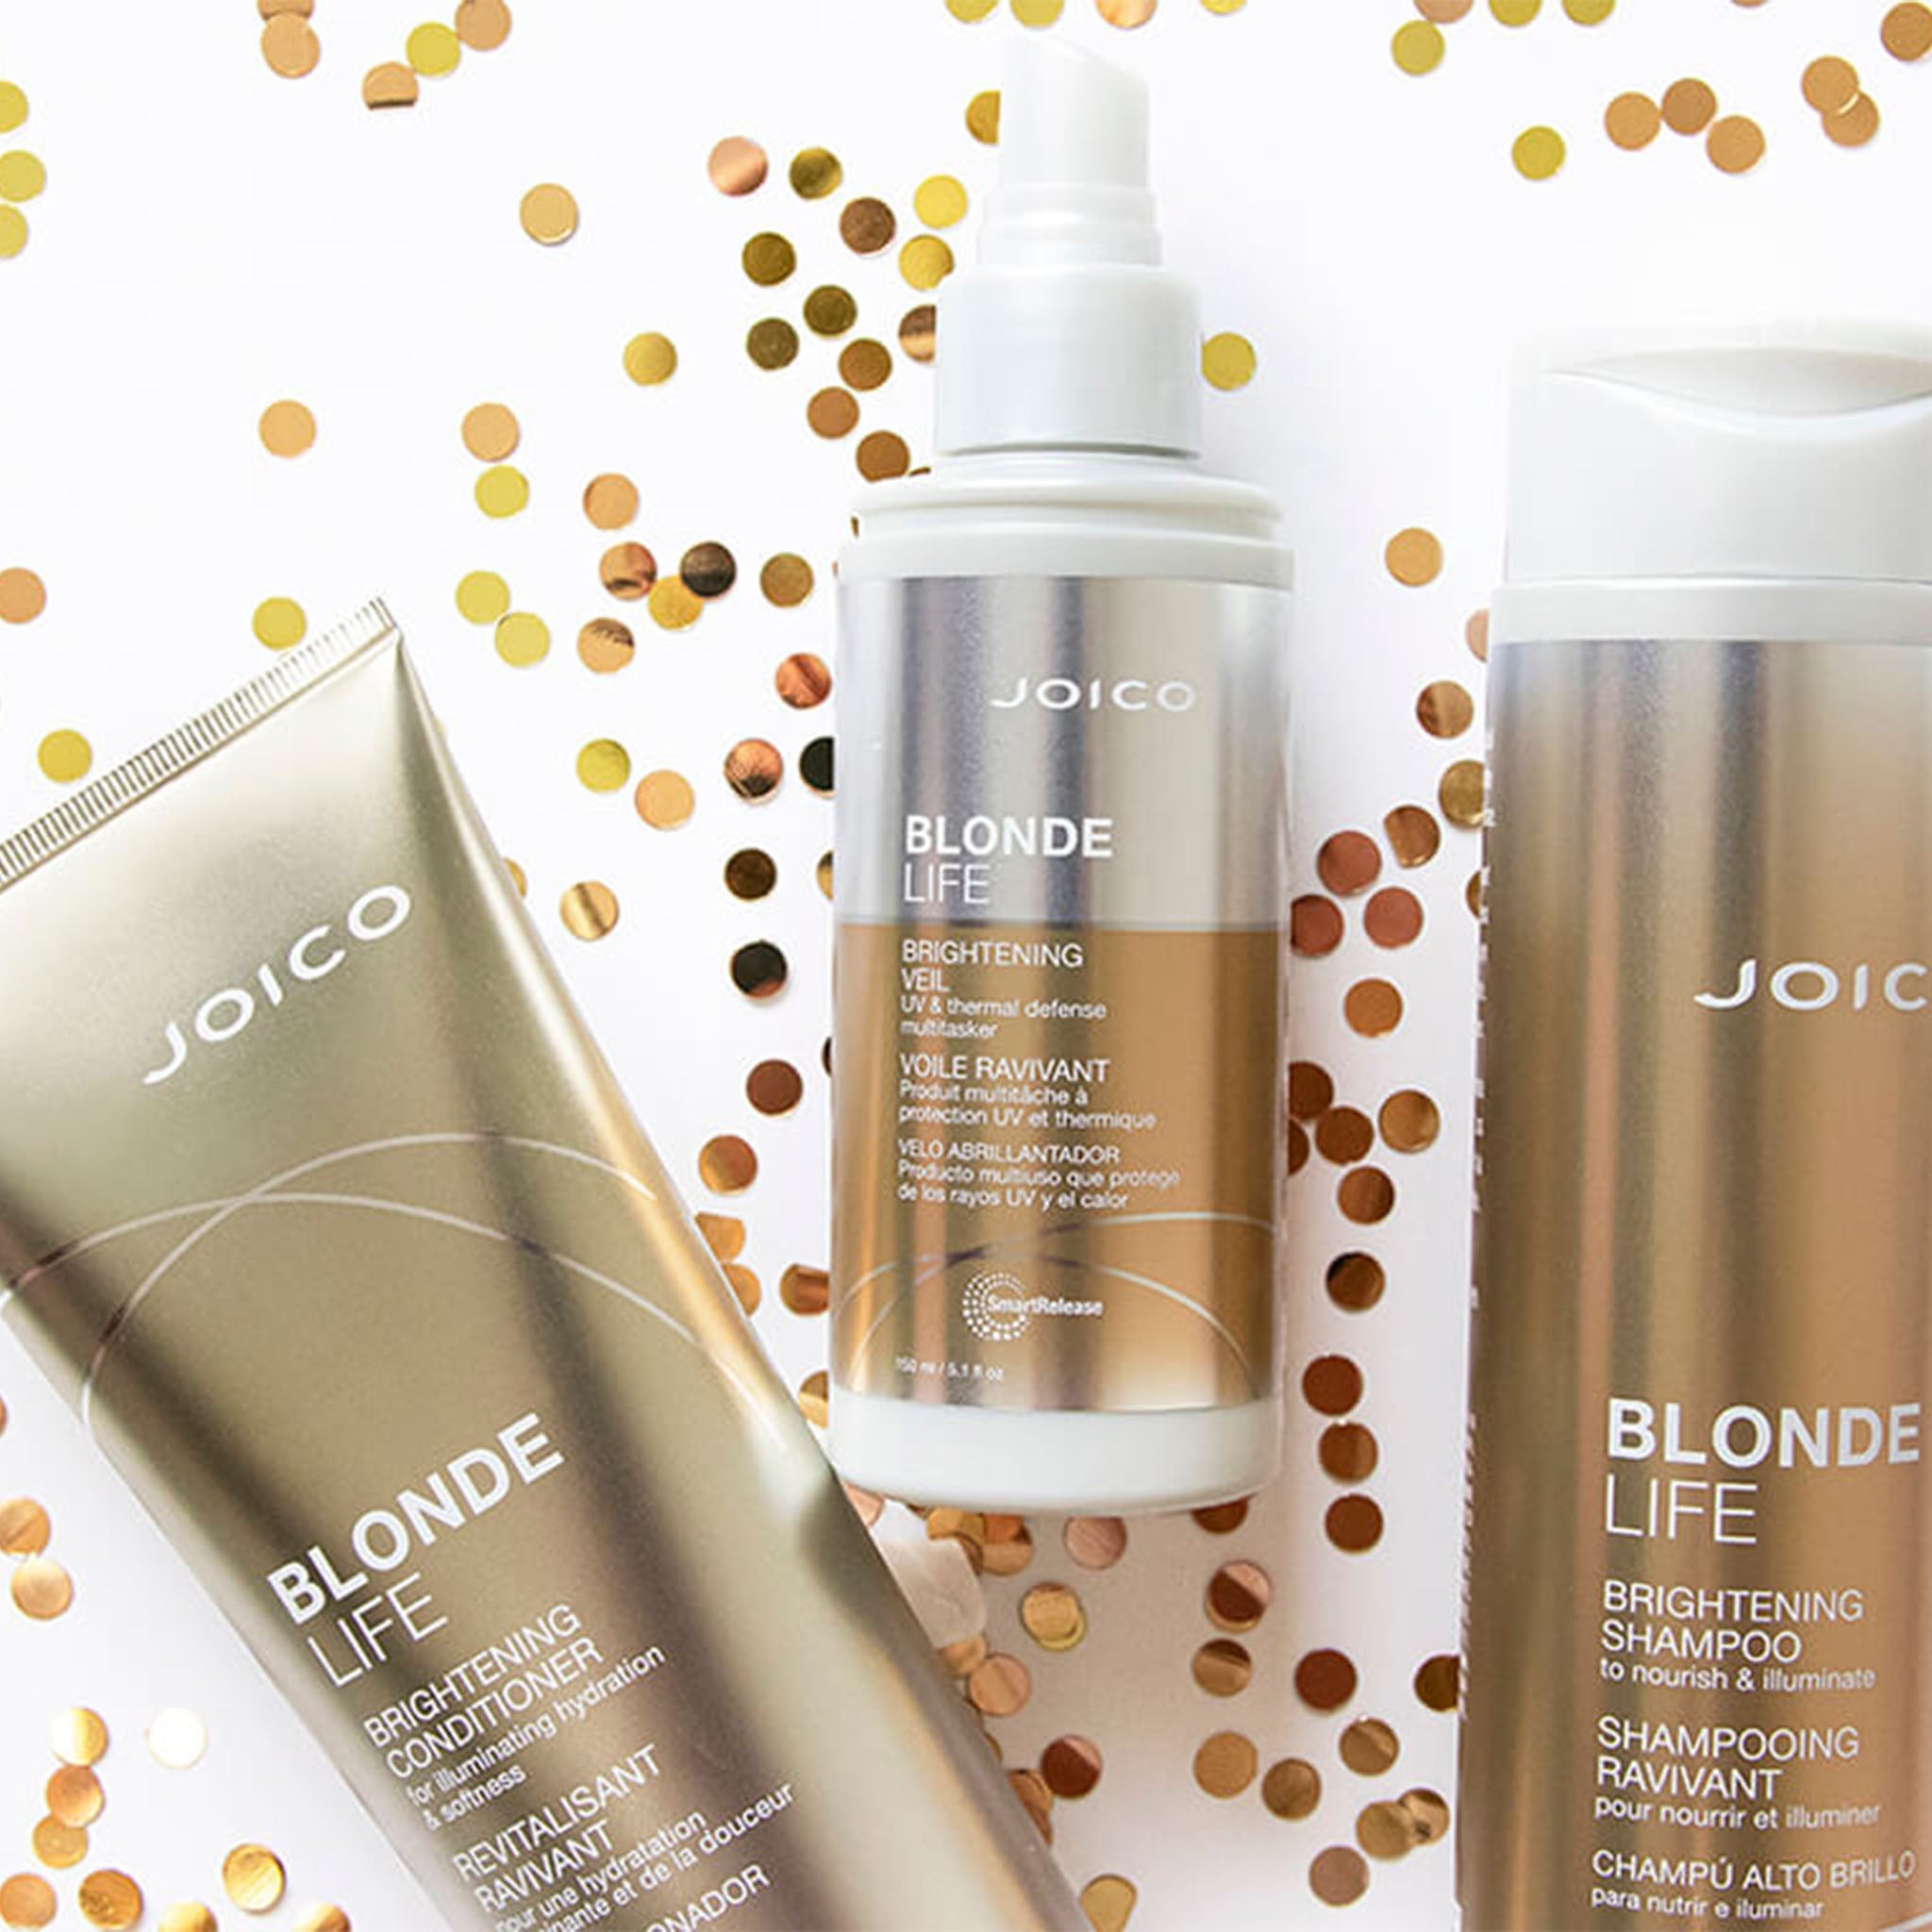 Joico. Shampoing Ravivant Blonde Life - 300 ml - Concept C. Shop